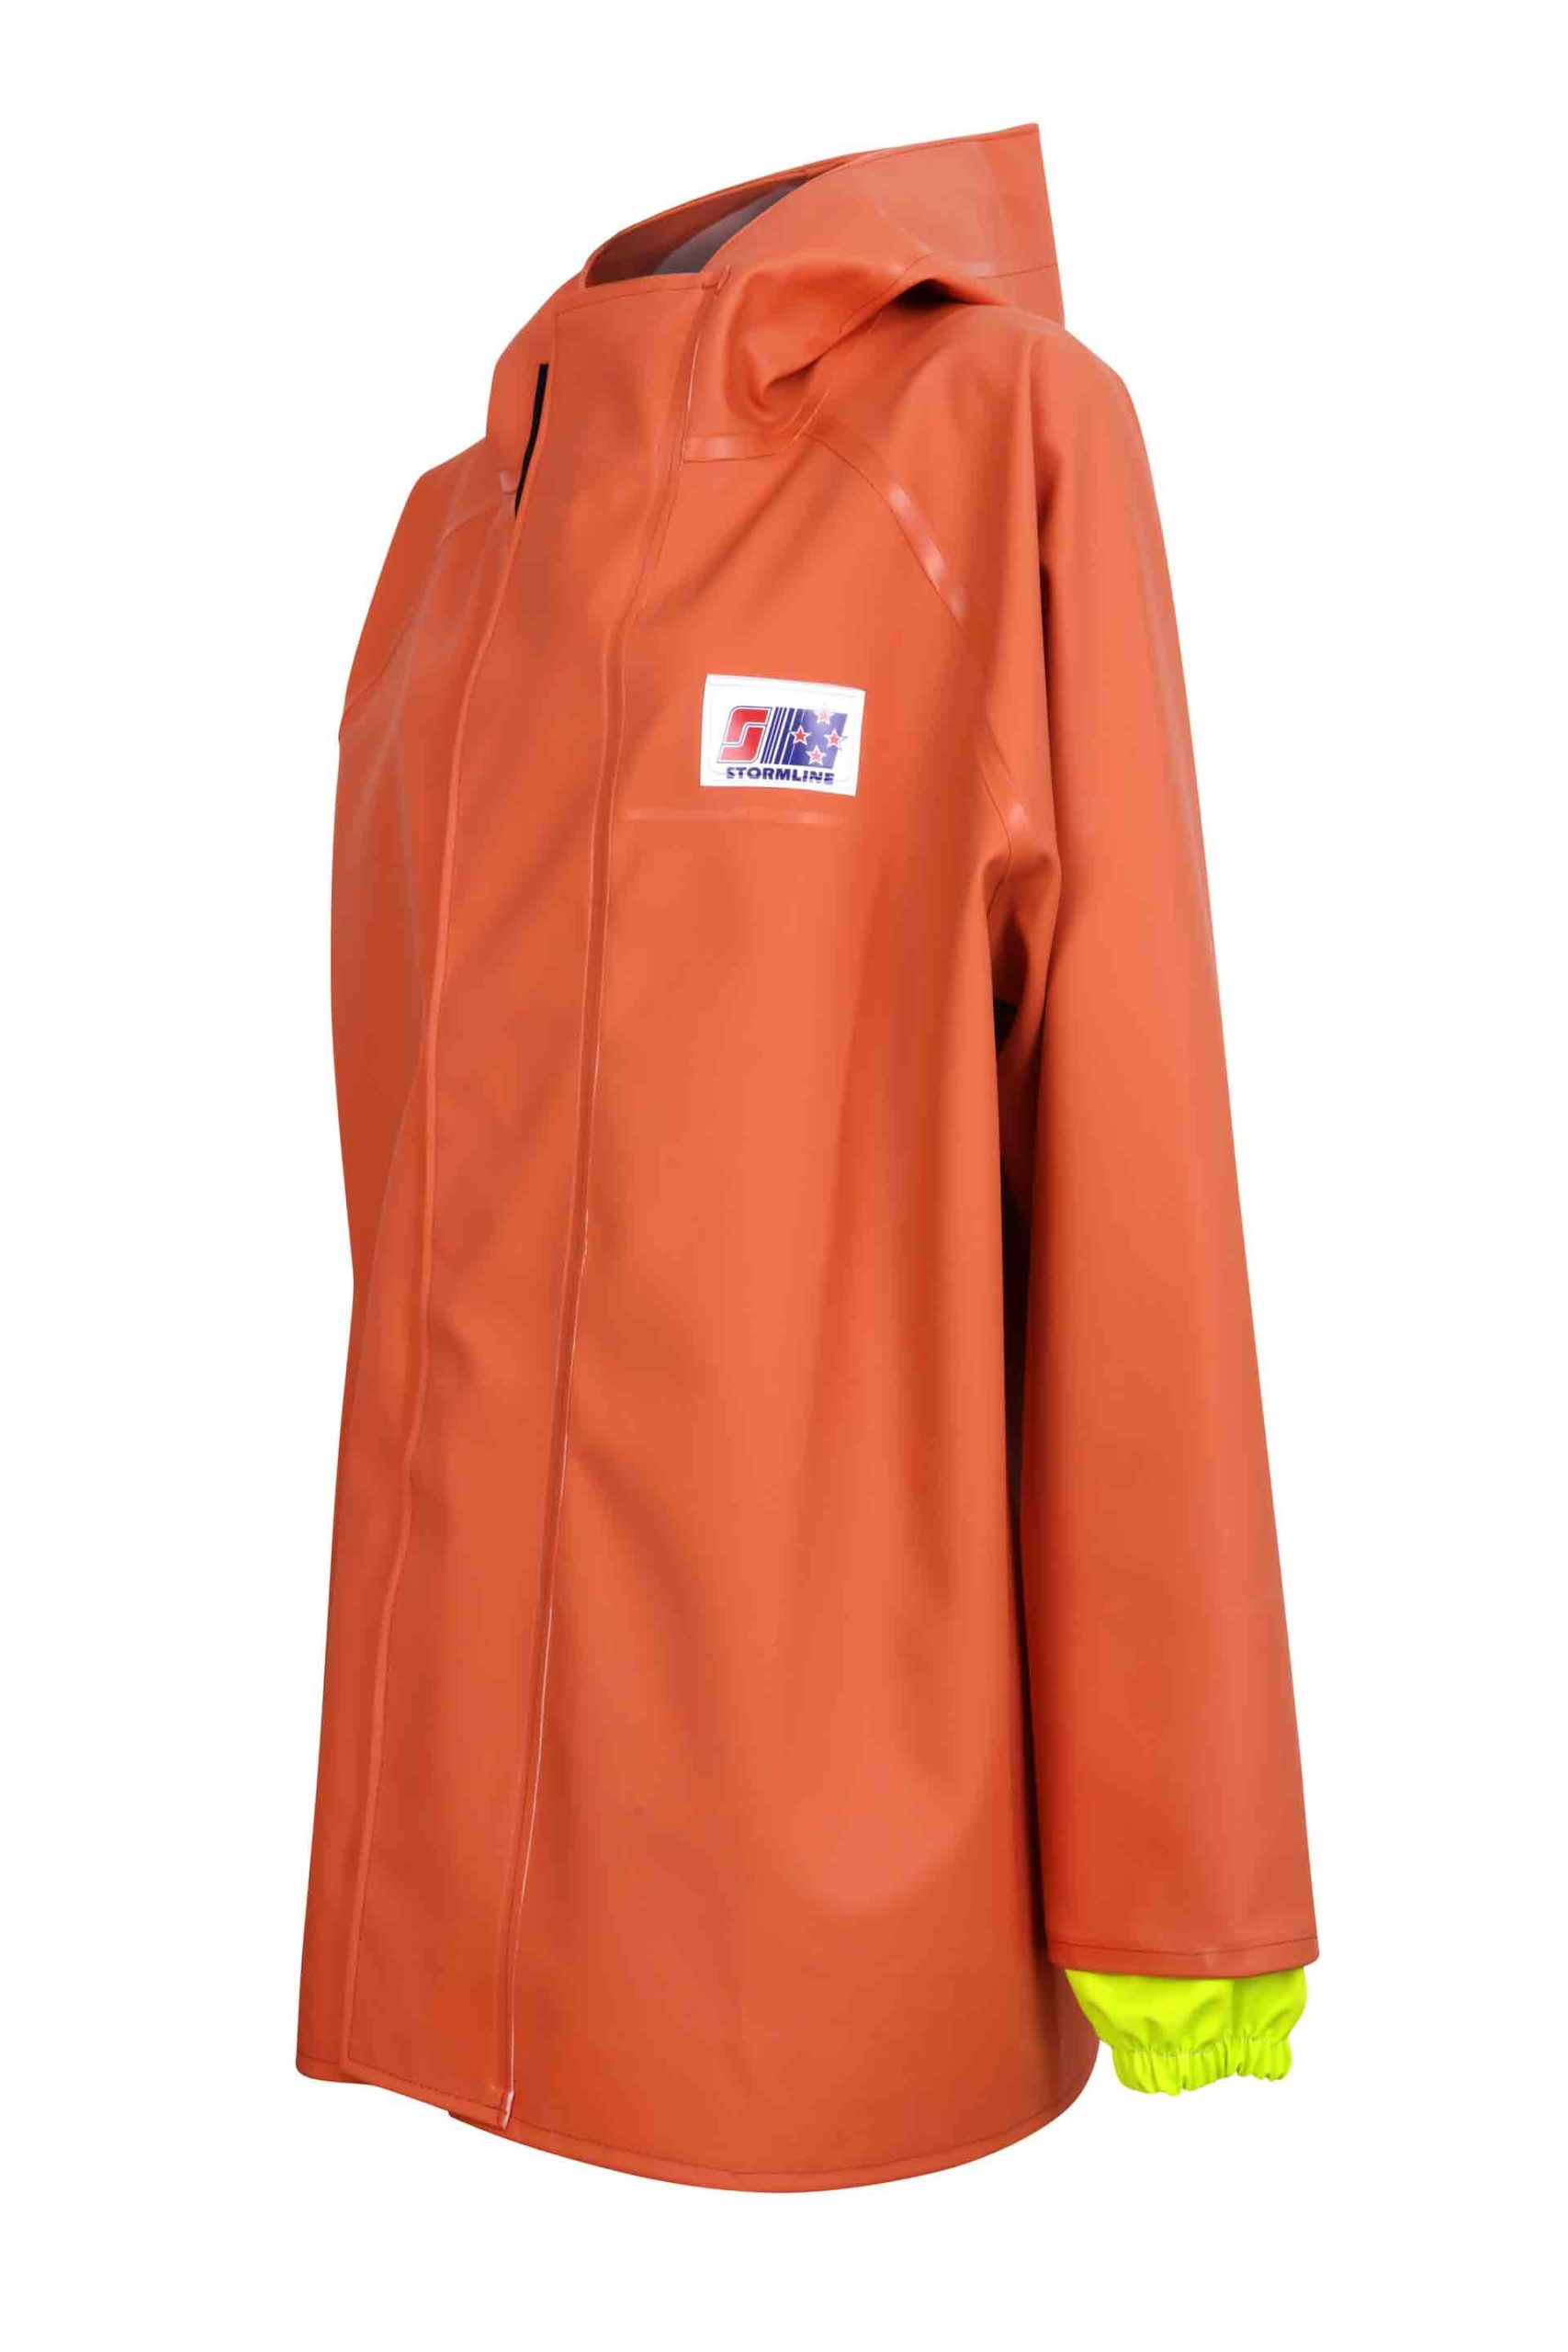 Free Ship* Stormline Lightweight Commercial Fishing Rain Gear Jacket Pick Size 